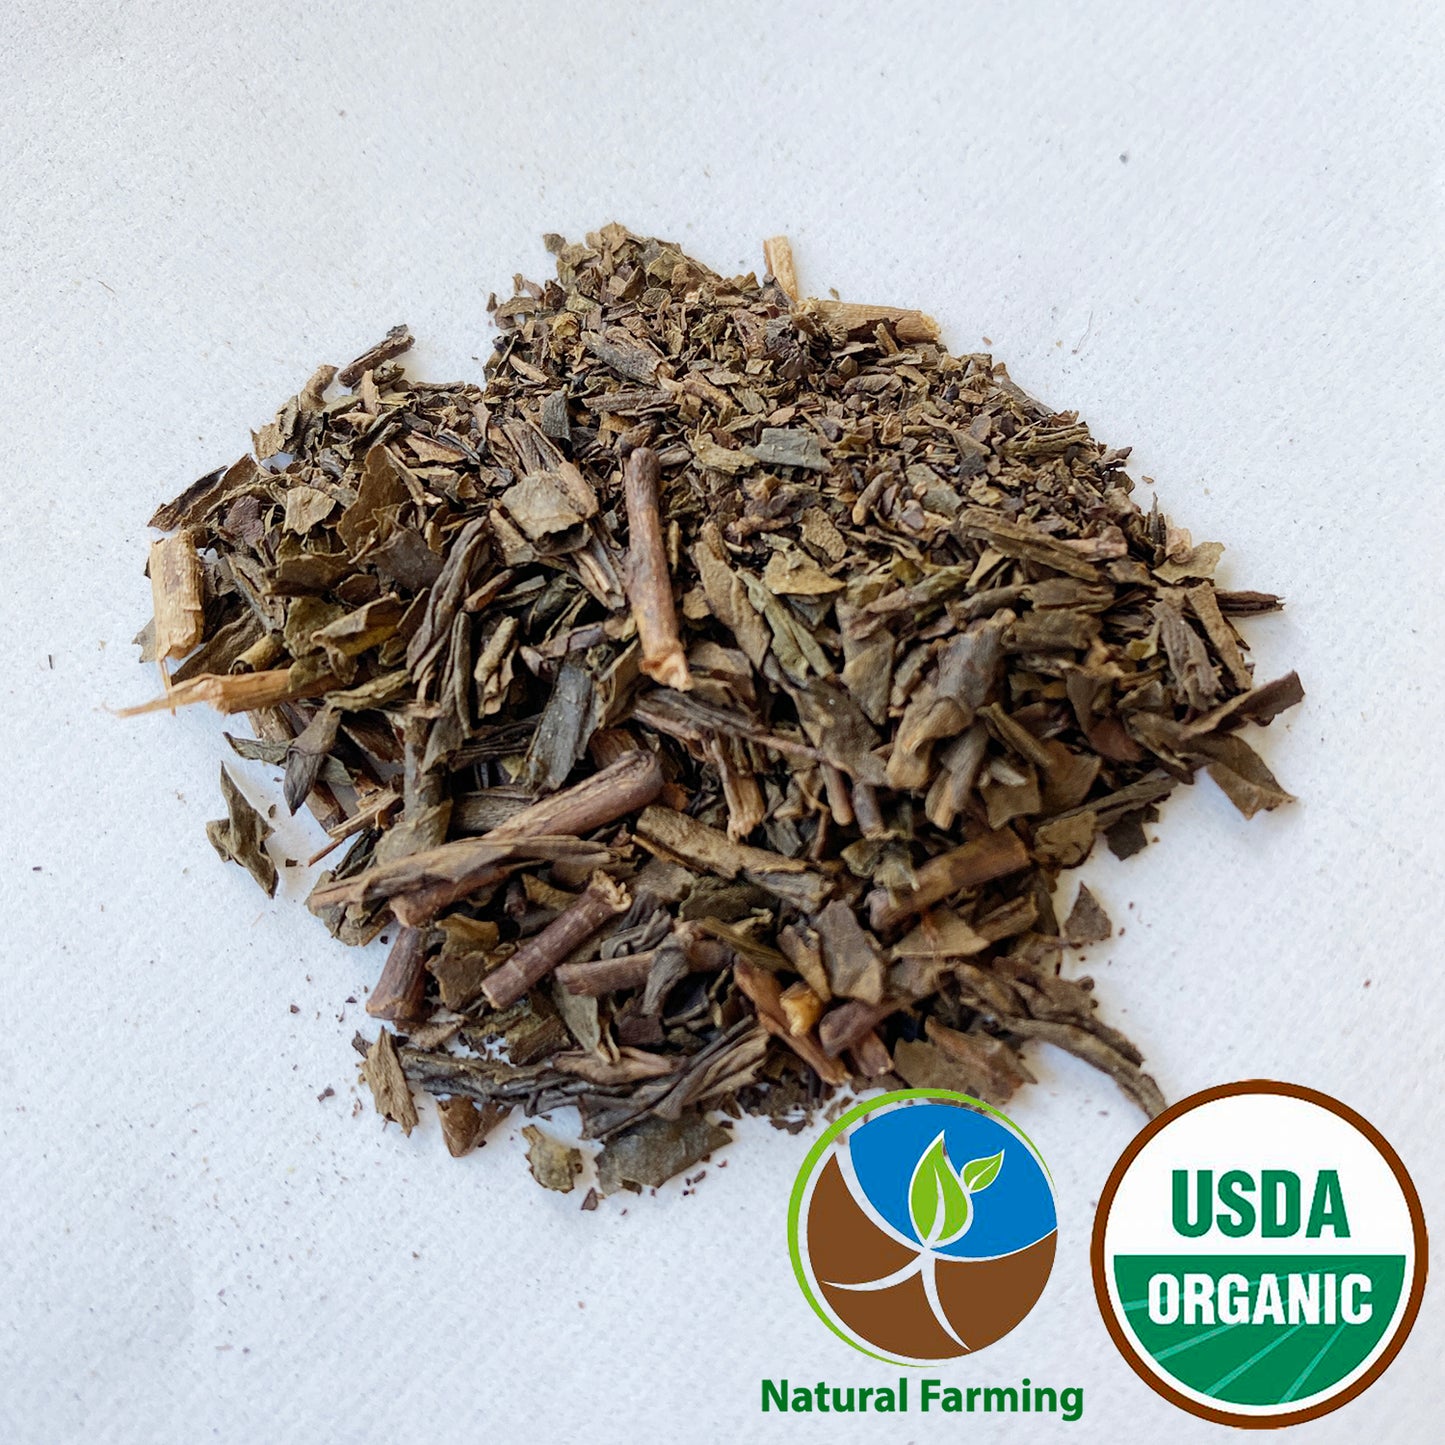 Natural Farming/Organic Premium Hoji Cha Tea Bag l 自然農法/有機 ほうじ茶